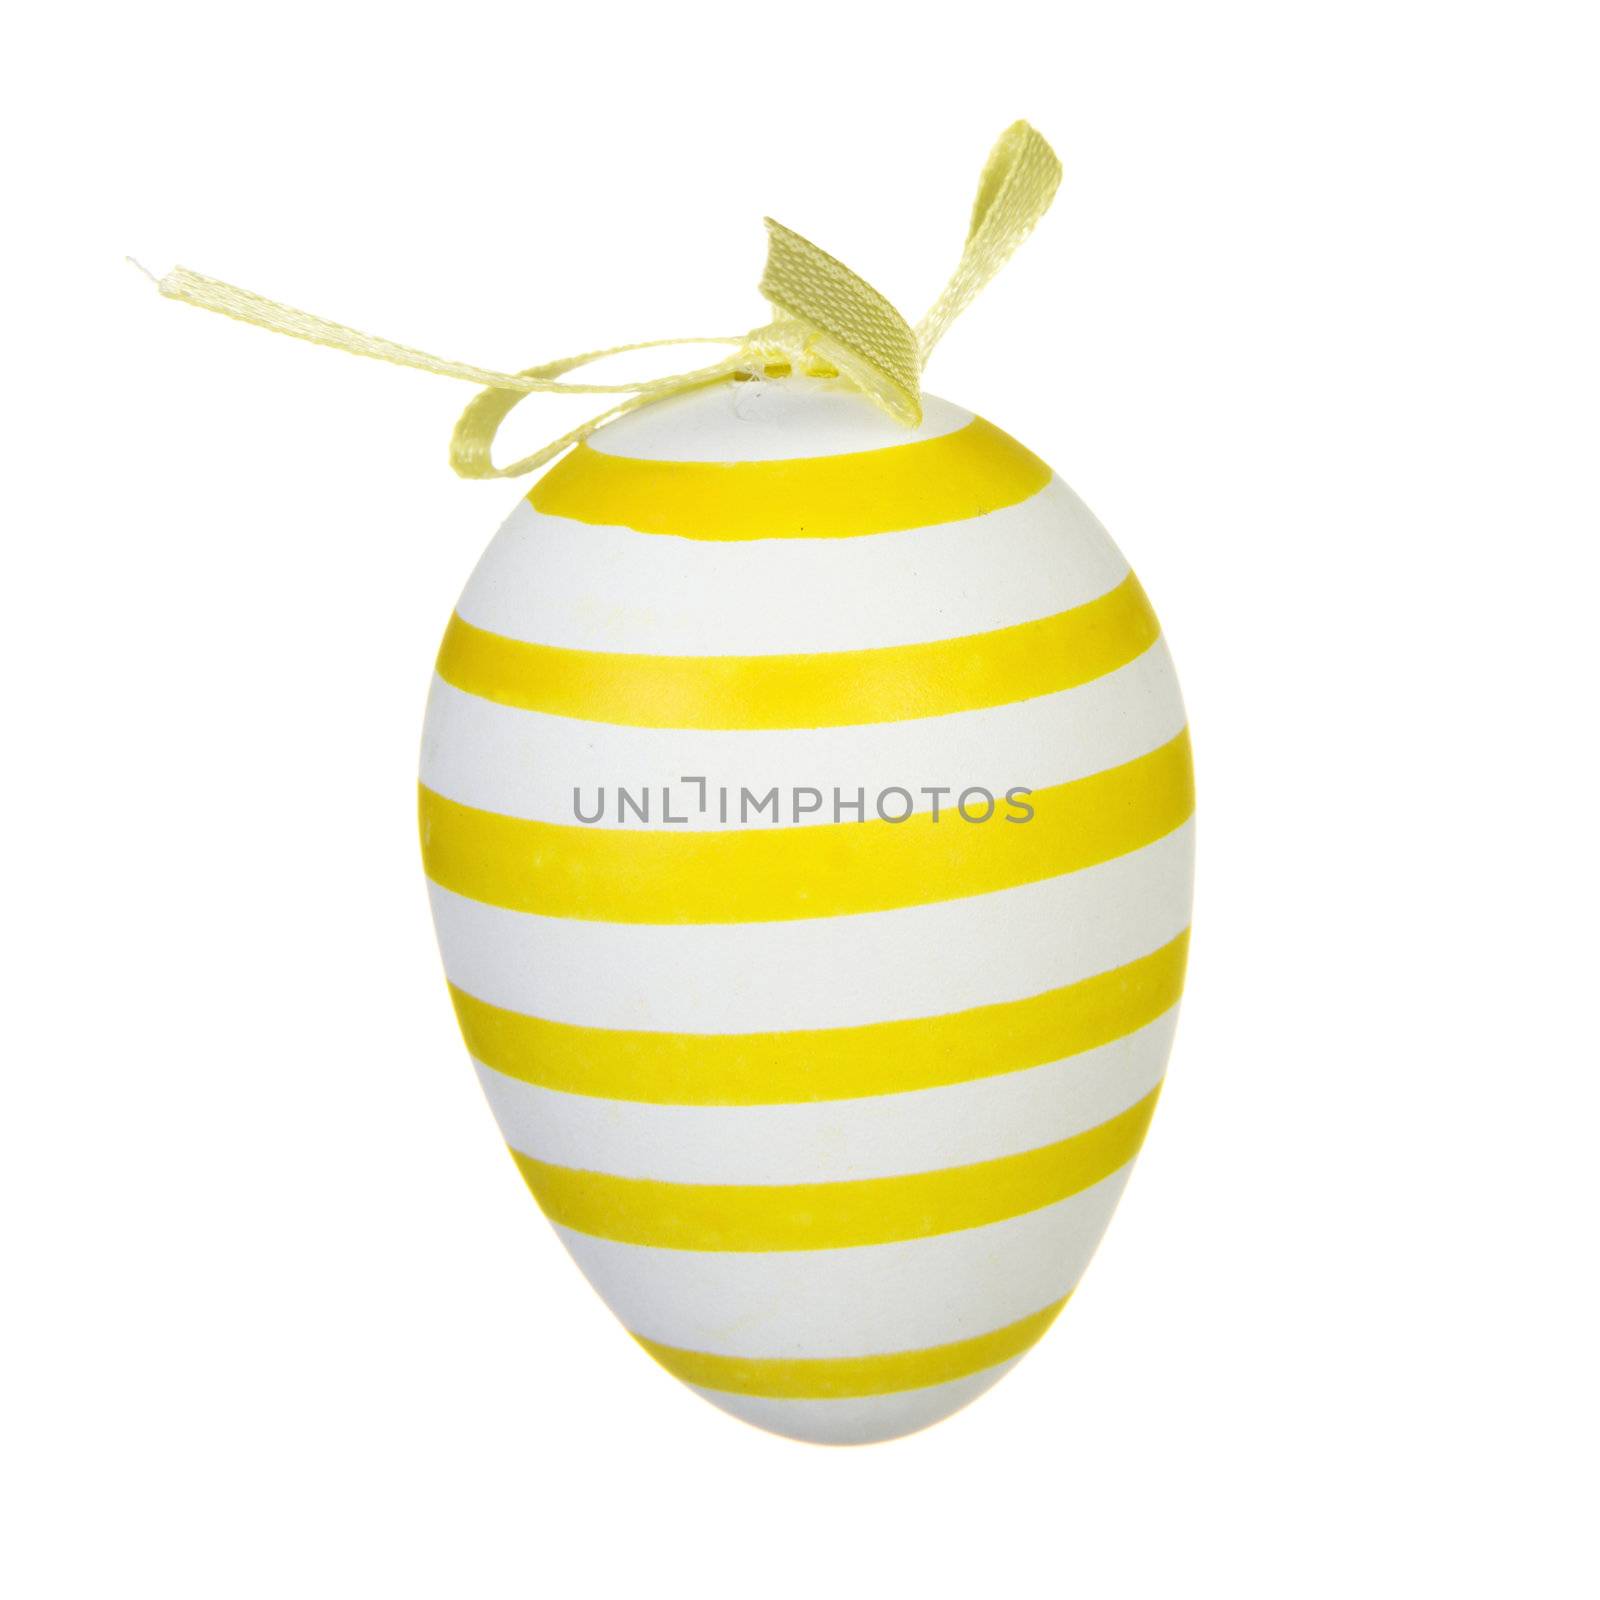 Easter egg decoration, isolated on white